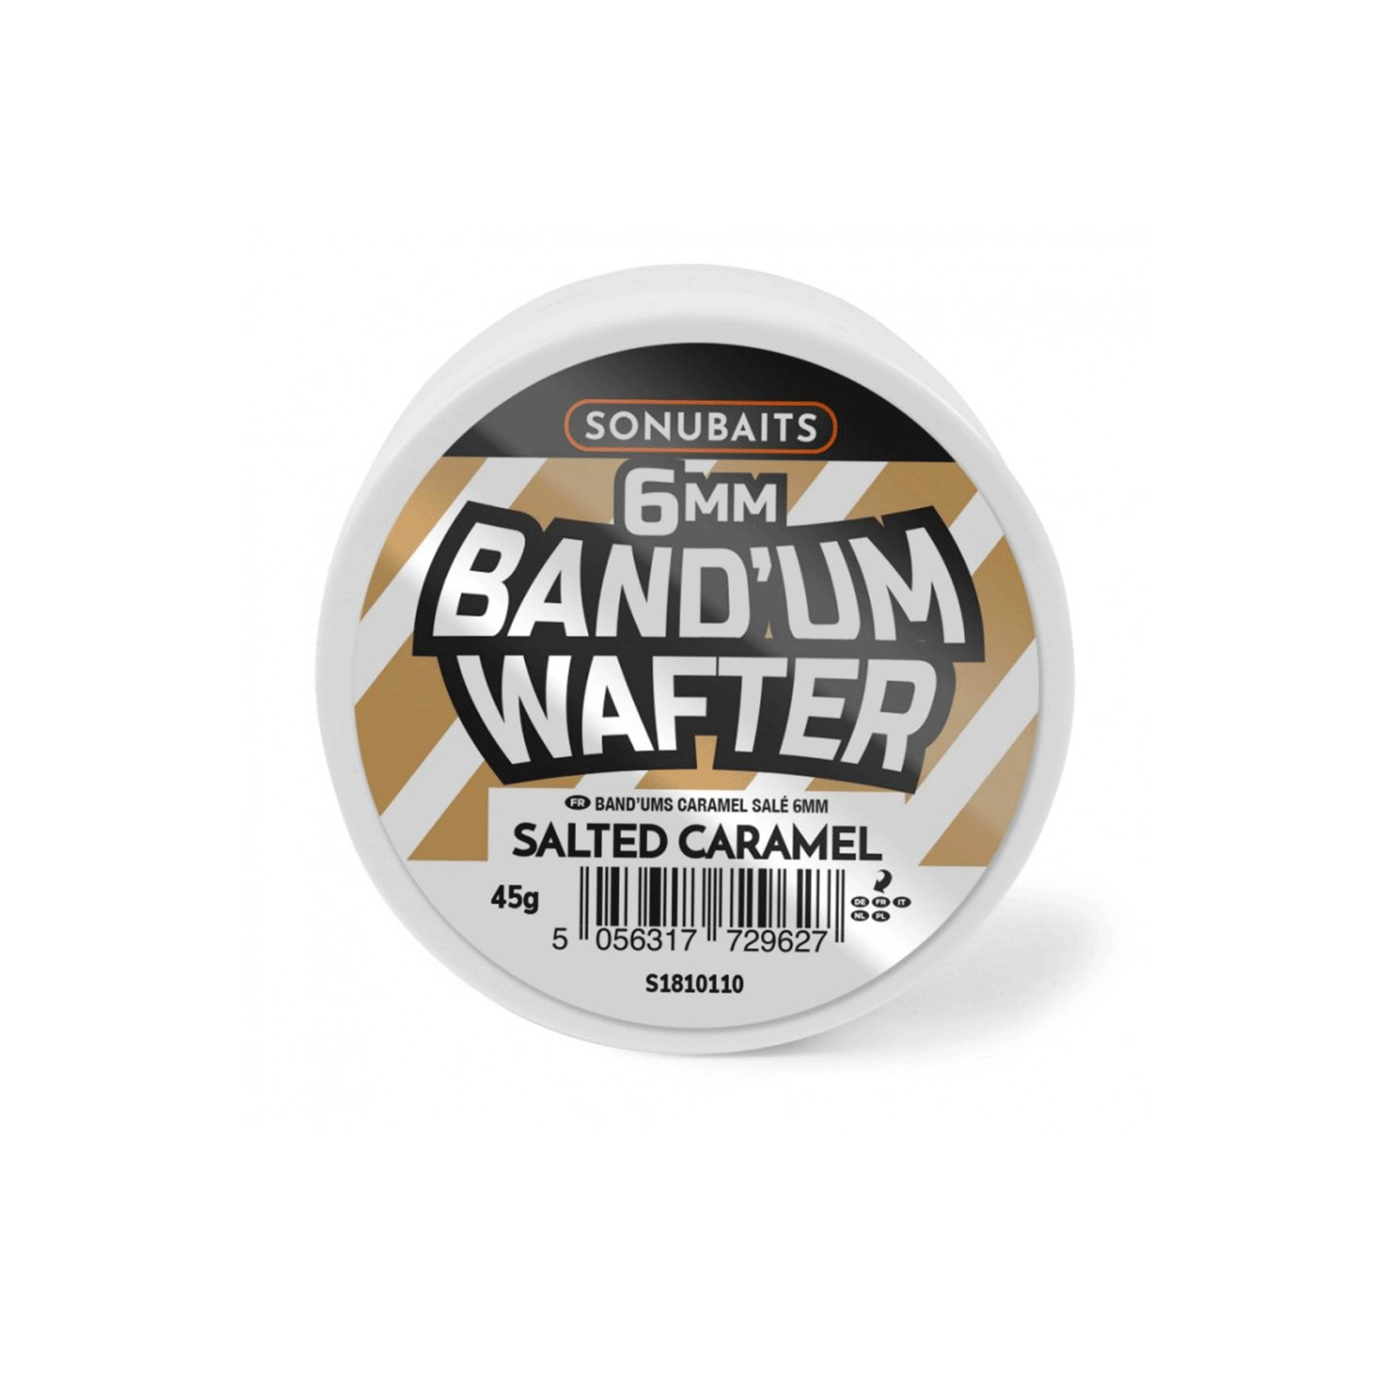 SONUBAITS - 6MM BAND'UM WAFTER 45g - Salted Caramel